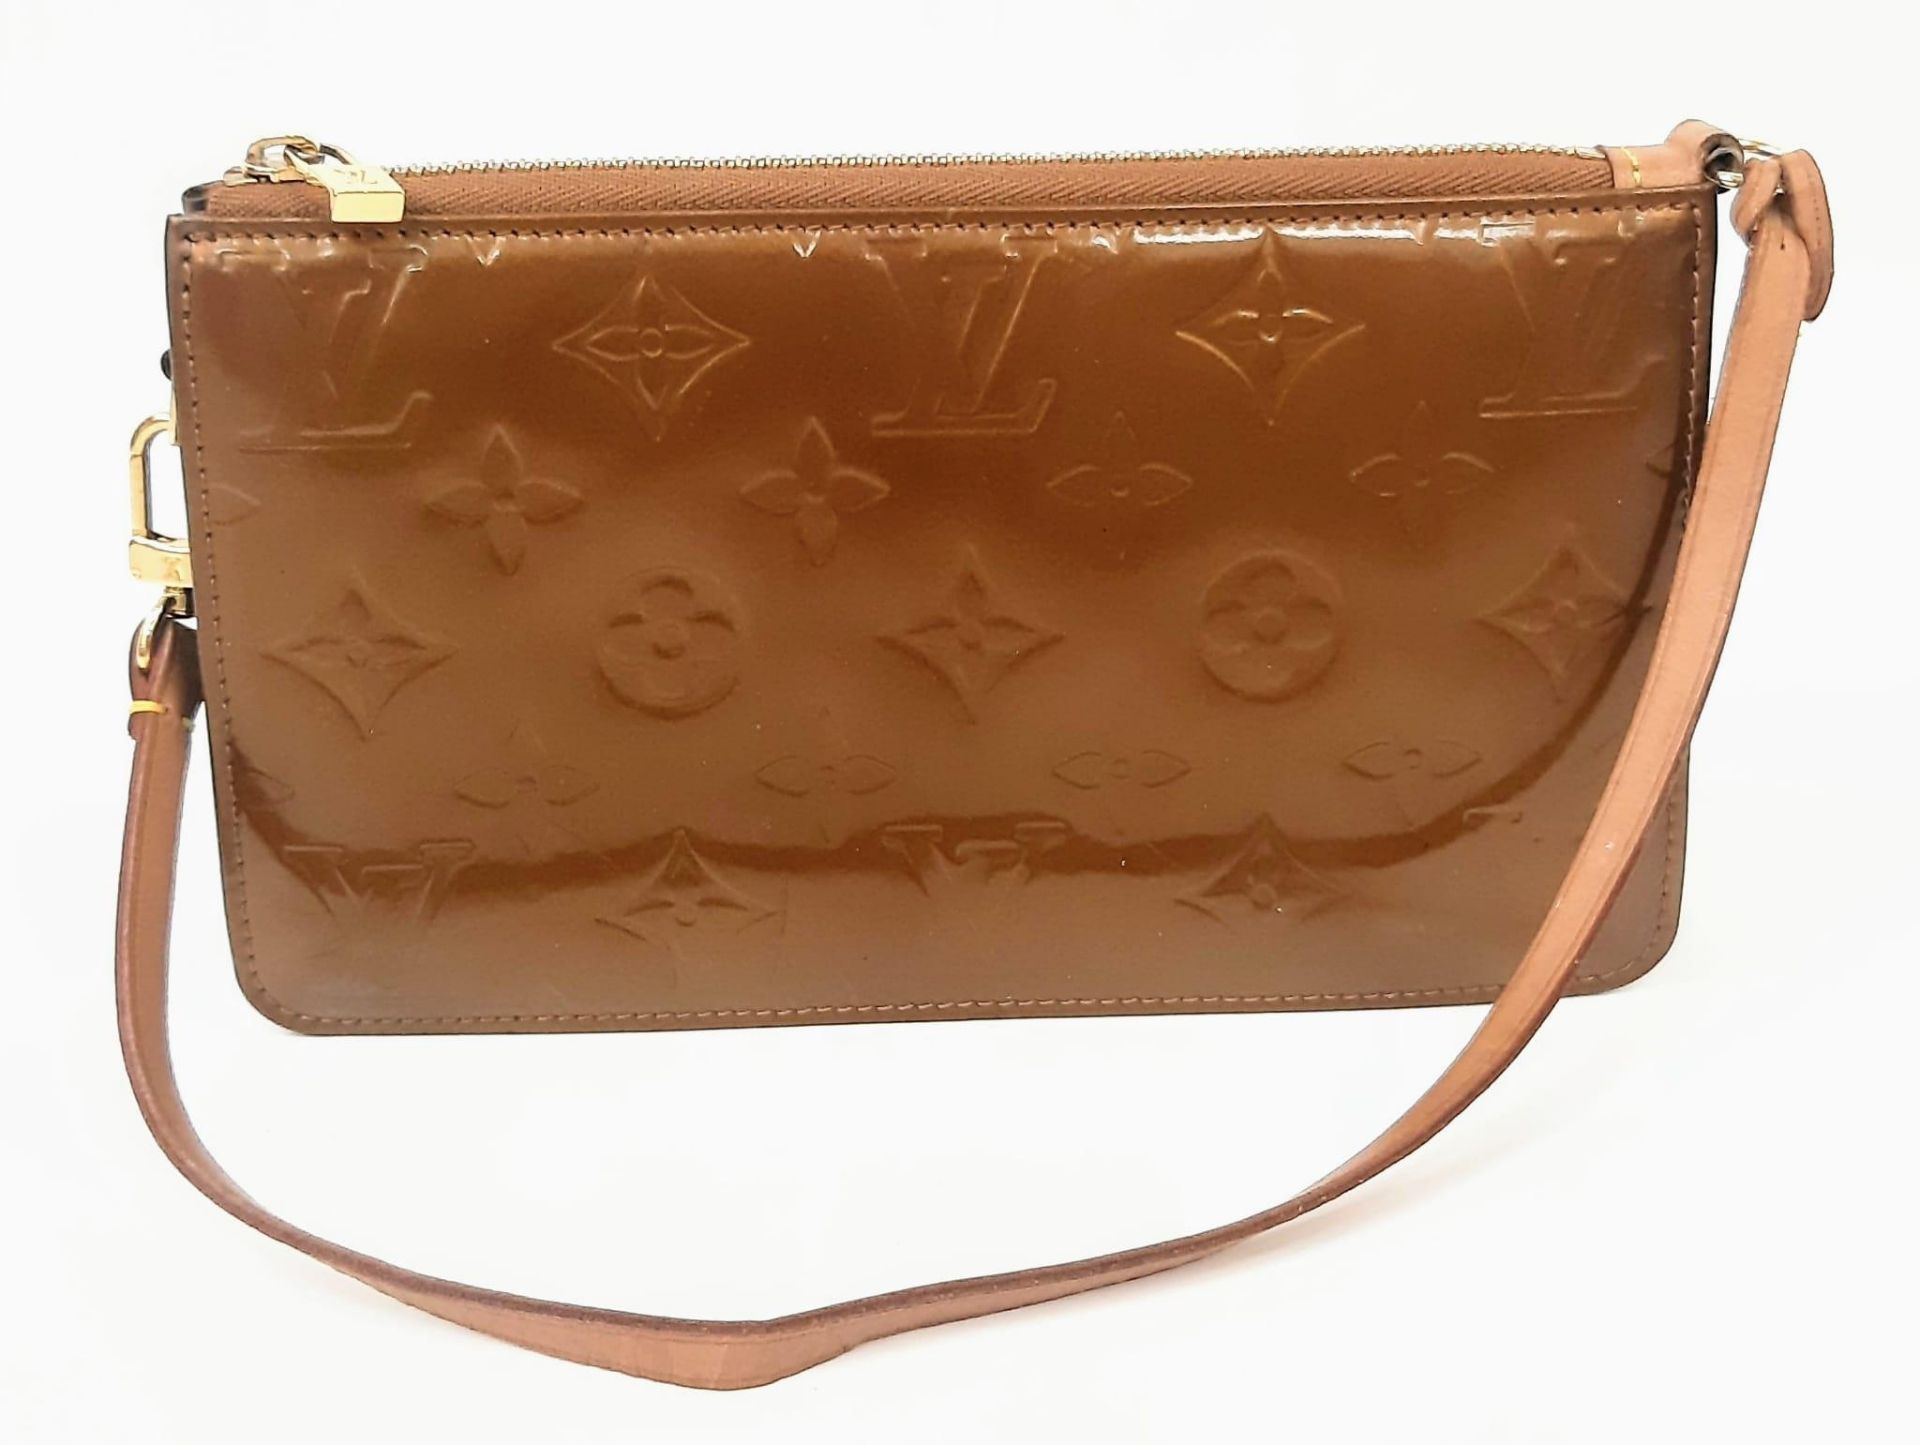 A Louis Vuitton Vernis Pochette Shoulder Bag in Copper, Emboss LV Detailing, Dark Tan Leather Strap.